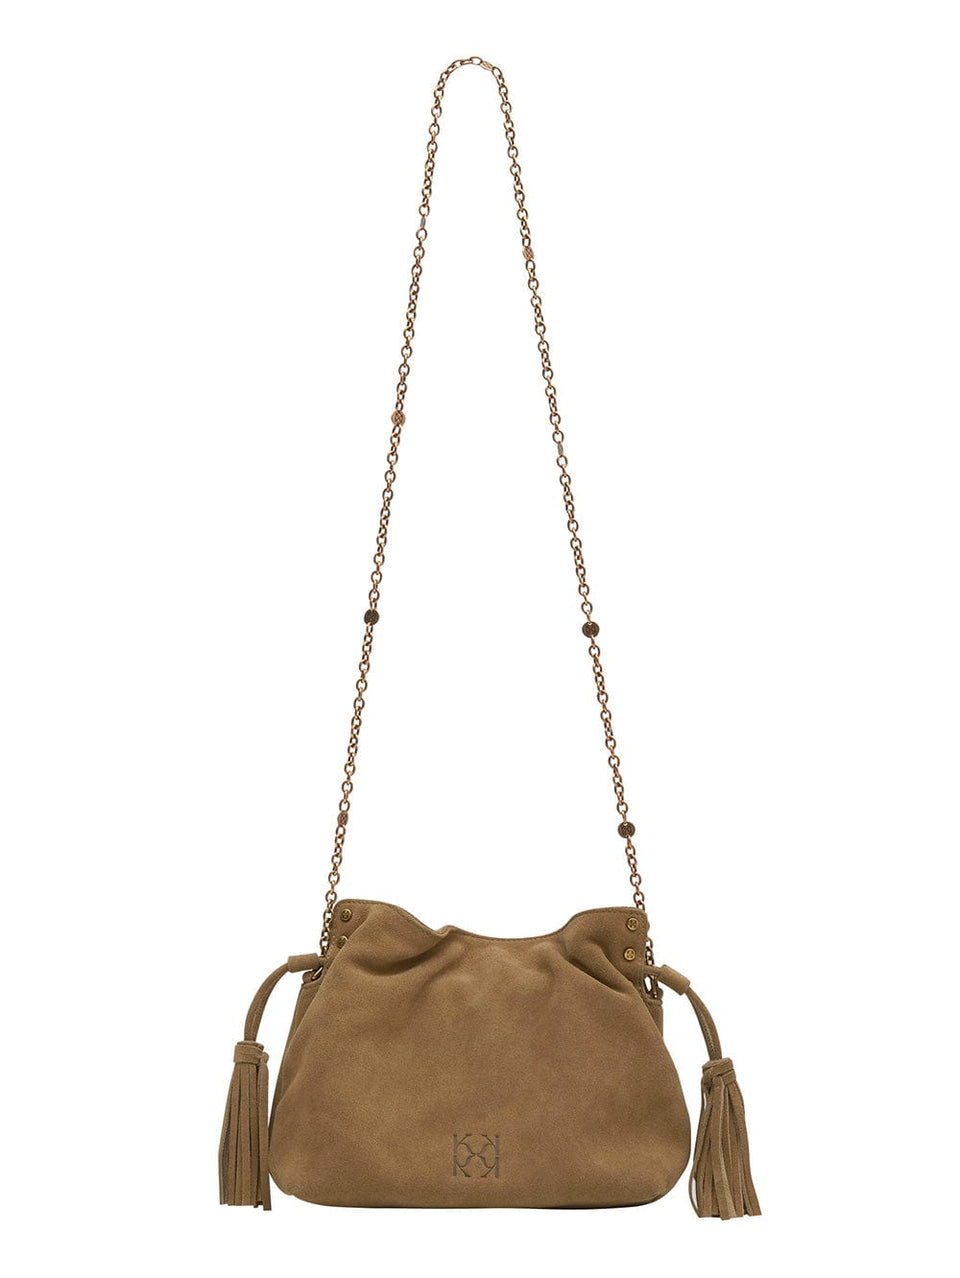 KIVARI Rosie Crossbody Bag in brown in gold chain and tassles